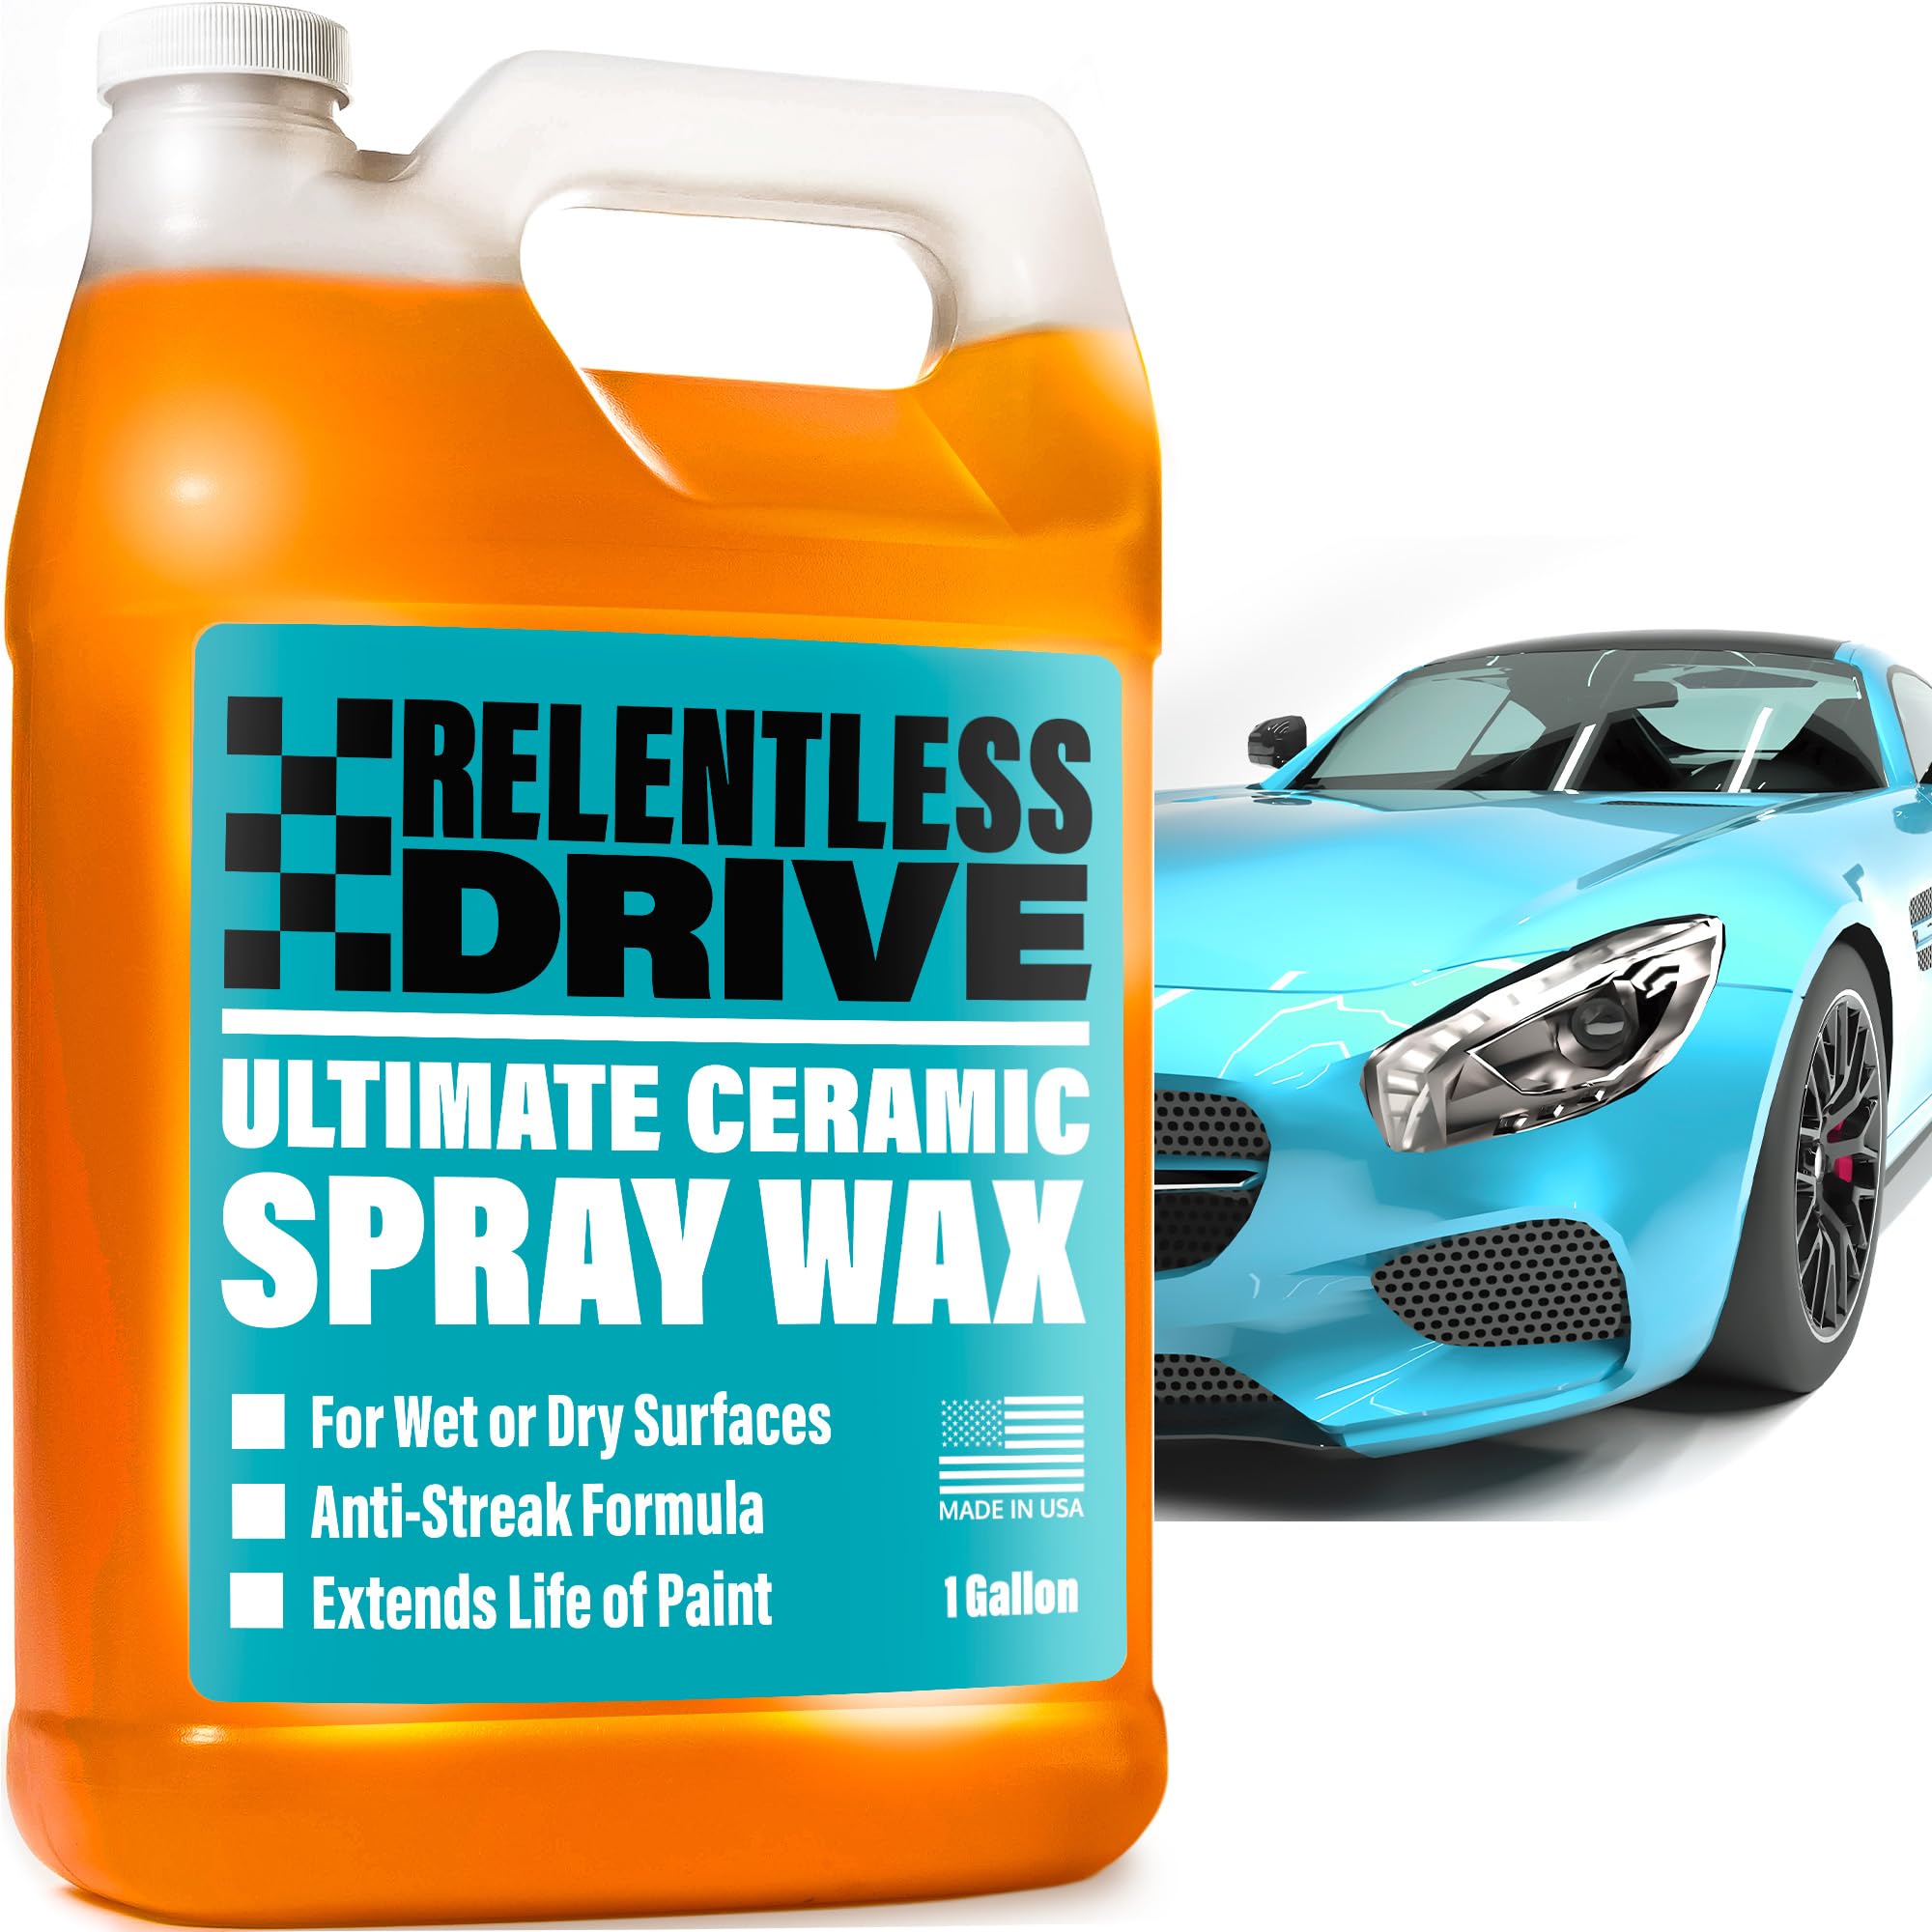 1 gallon Relentless Drive Ceramic Spray Wax, $19.99 after coupon